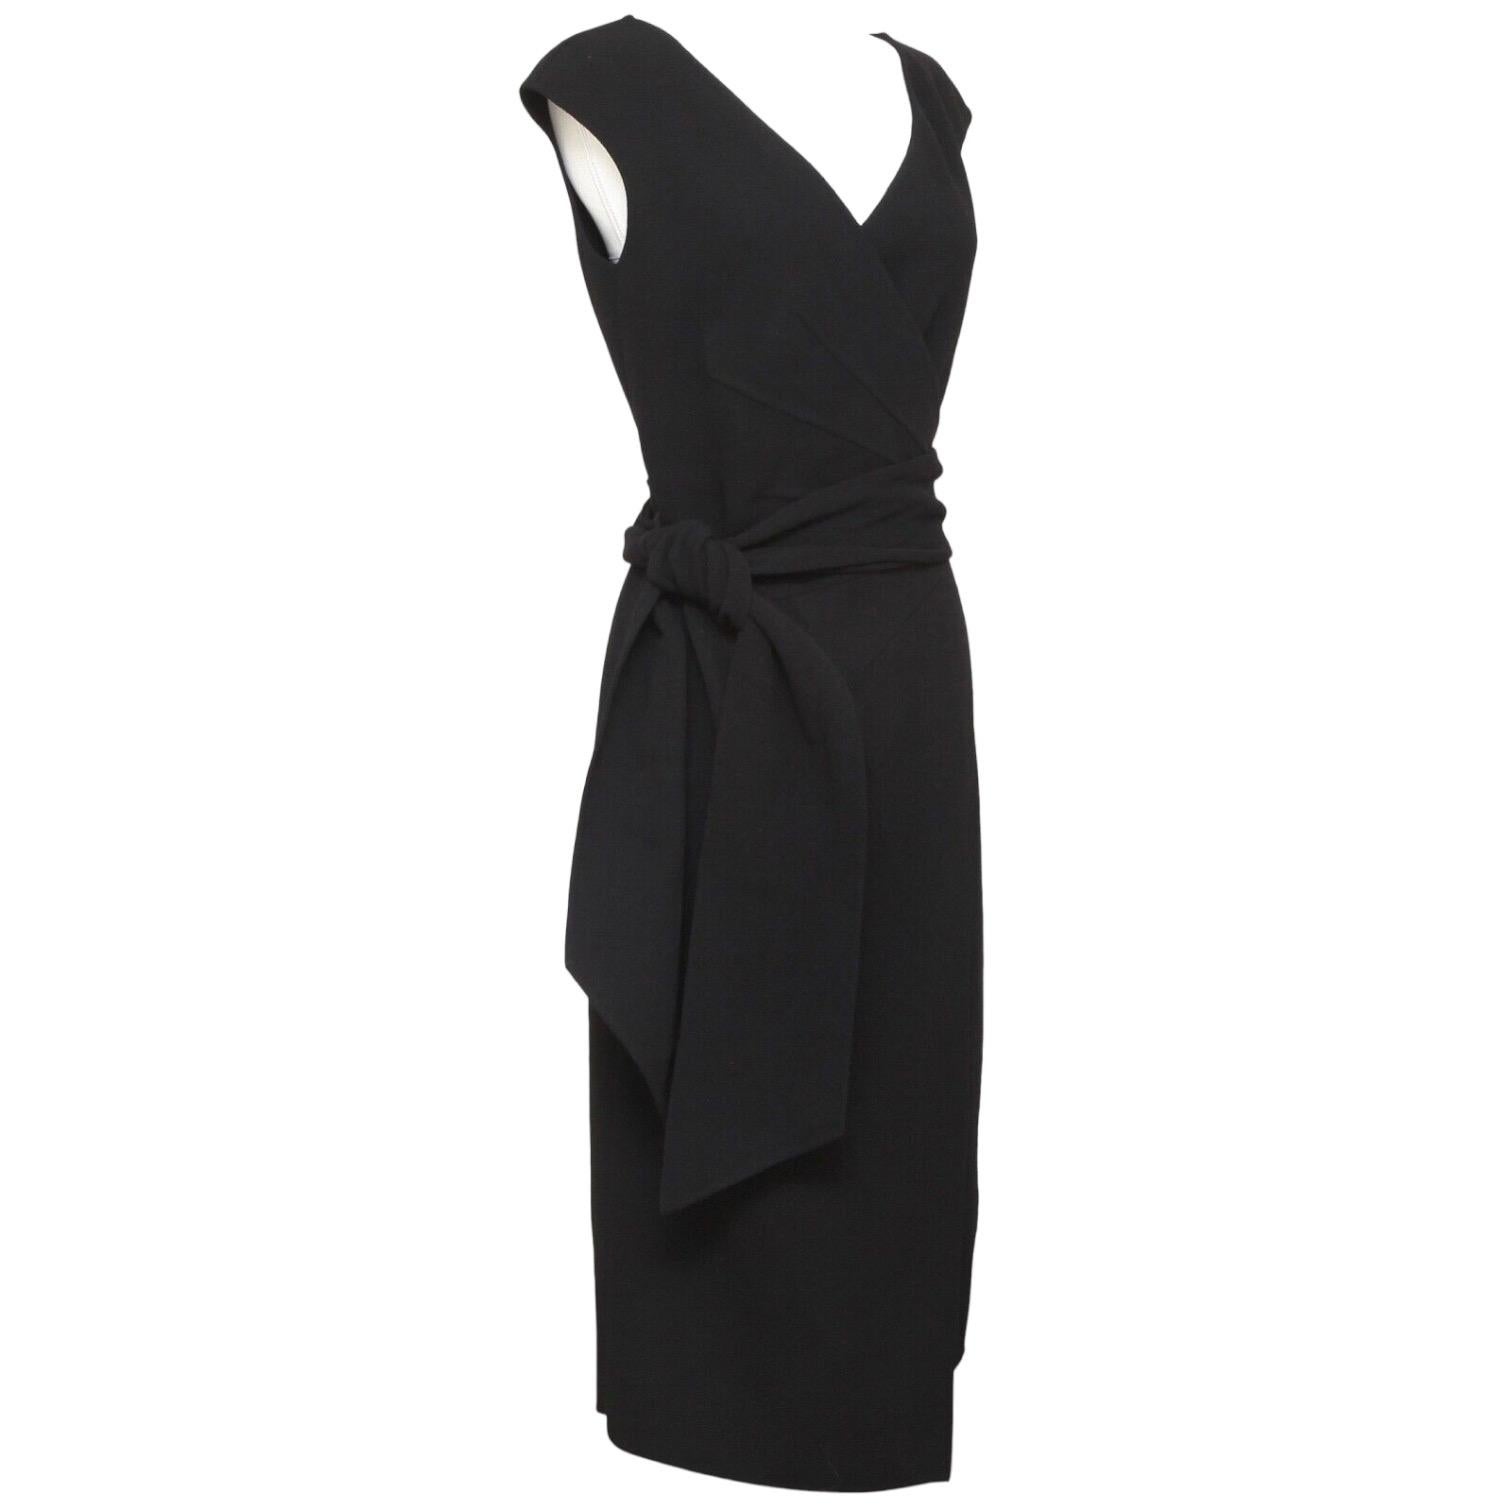 OSCAR DE LA RENTA Kleid Schwarz ärmellos Wrap Knit Sz 8 NWT $2190 im Zustand „Neu“ im Angebot in Hollywood, FL